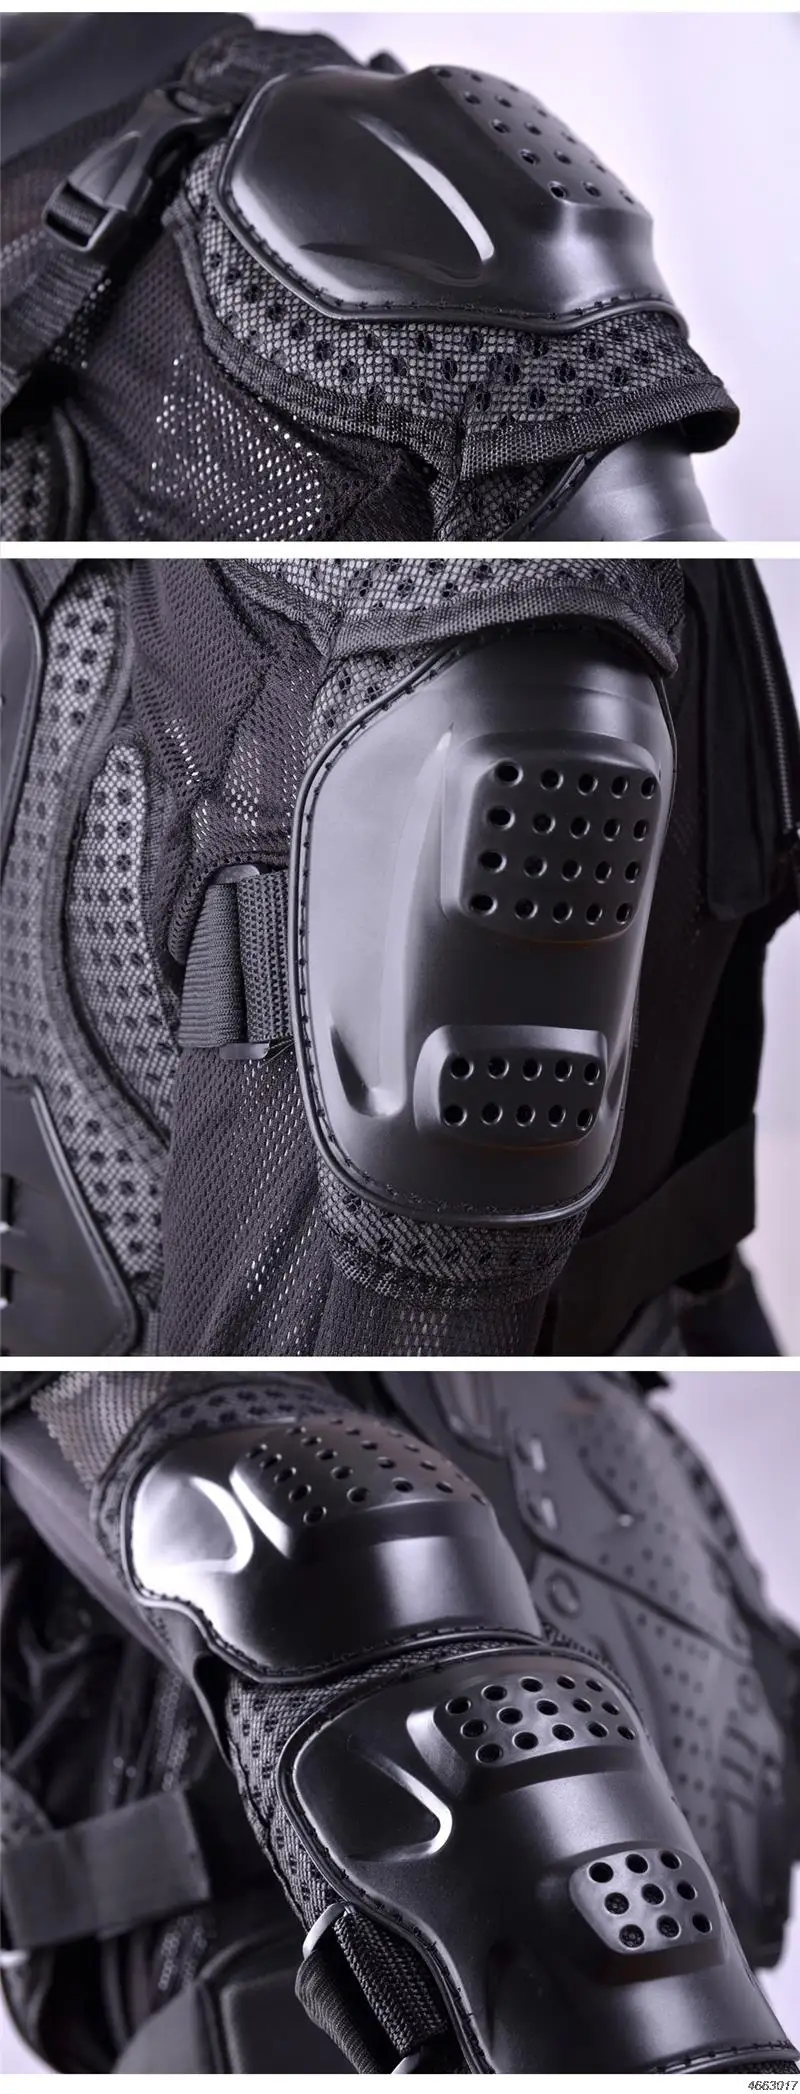 GHOST RACING rcycle Armor куртка для мотокросса Защита тела для езды на мотоцикле защита для спуска на гору защита для груди защита для спины